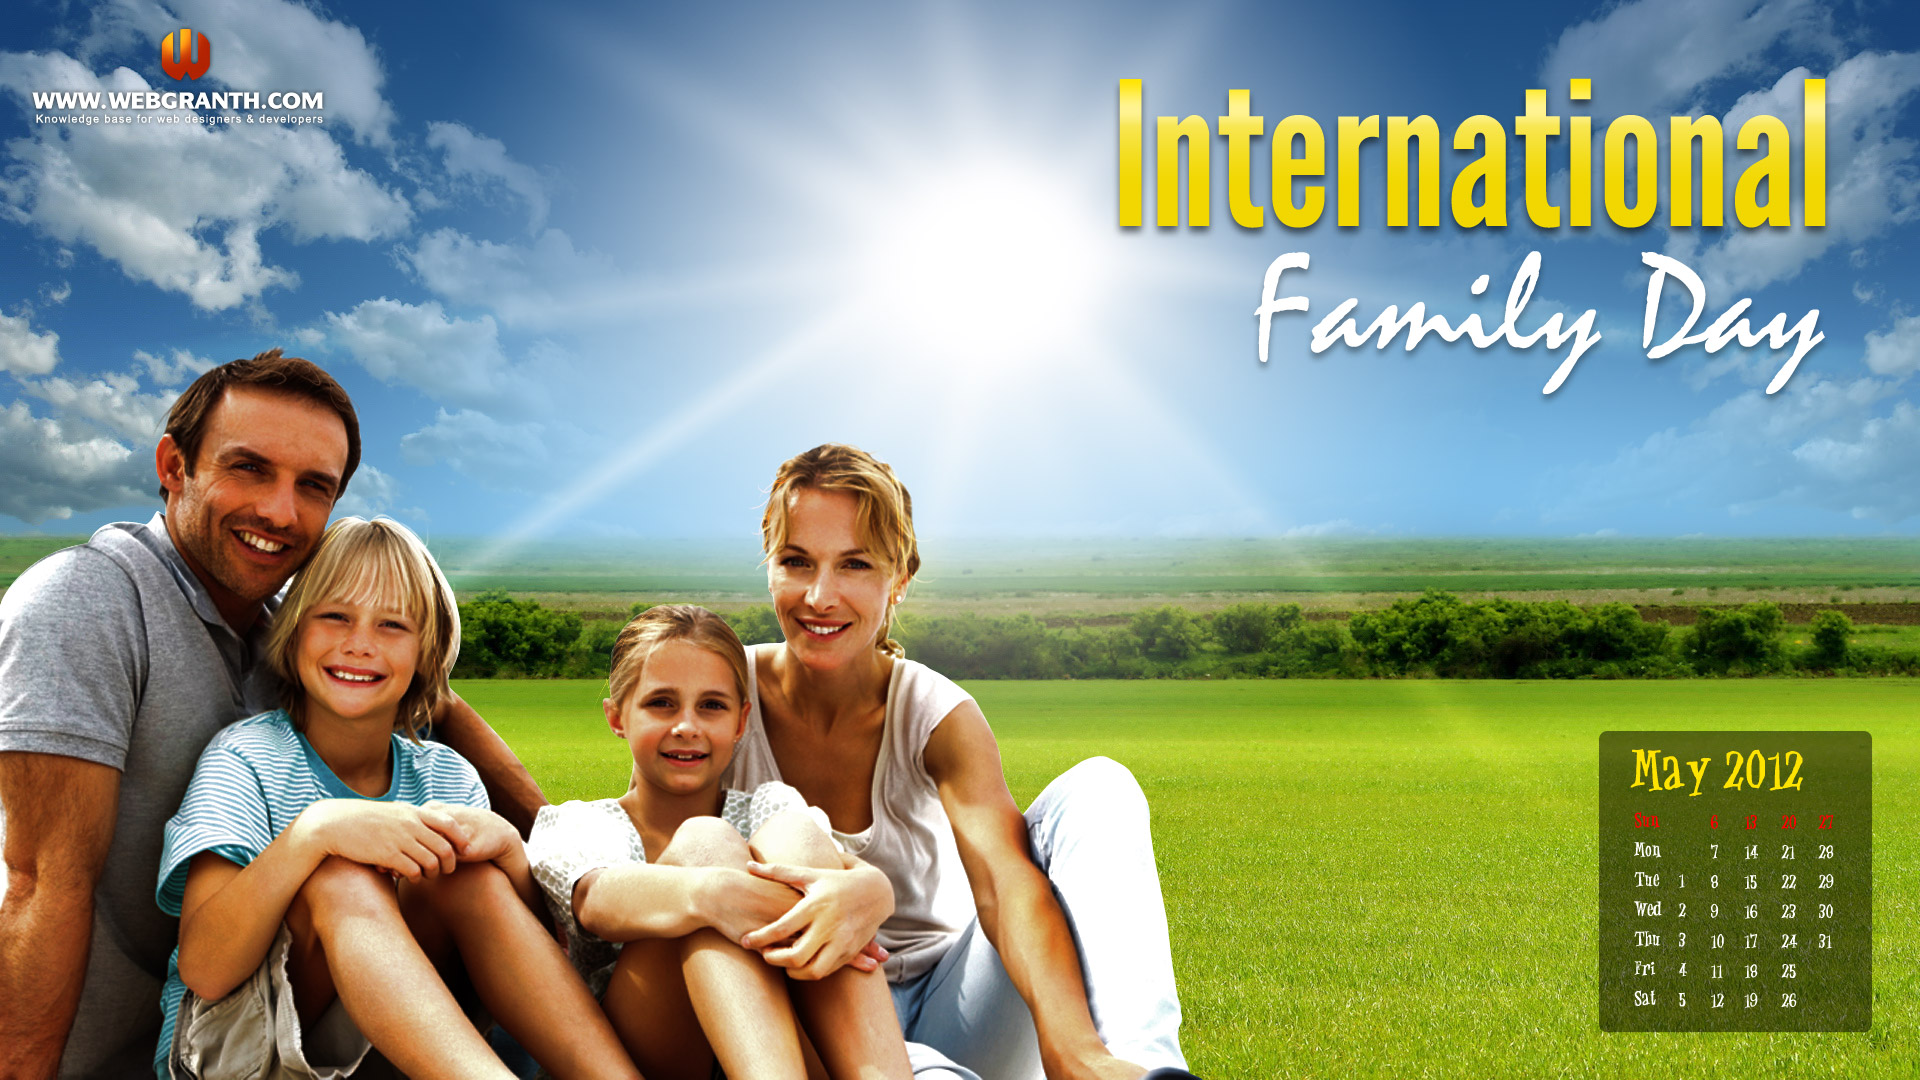  free Desktop International Family Day Wallpaper   Webgranth 2015